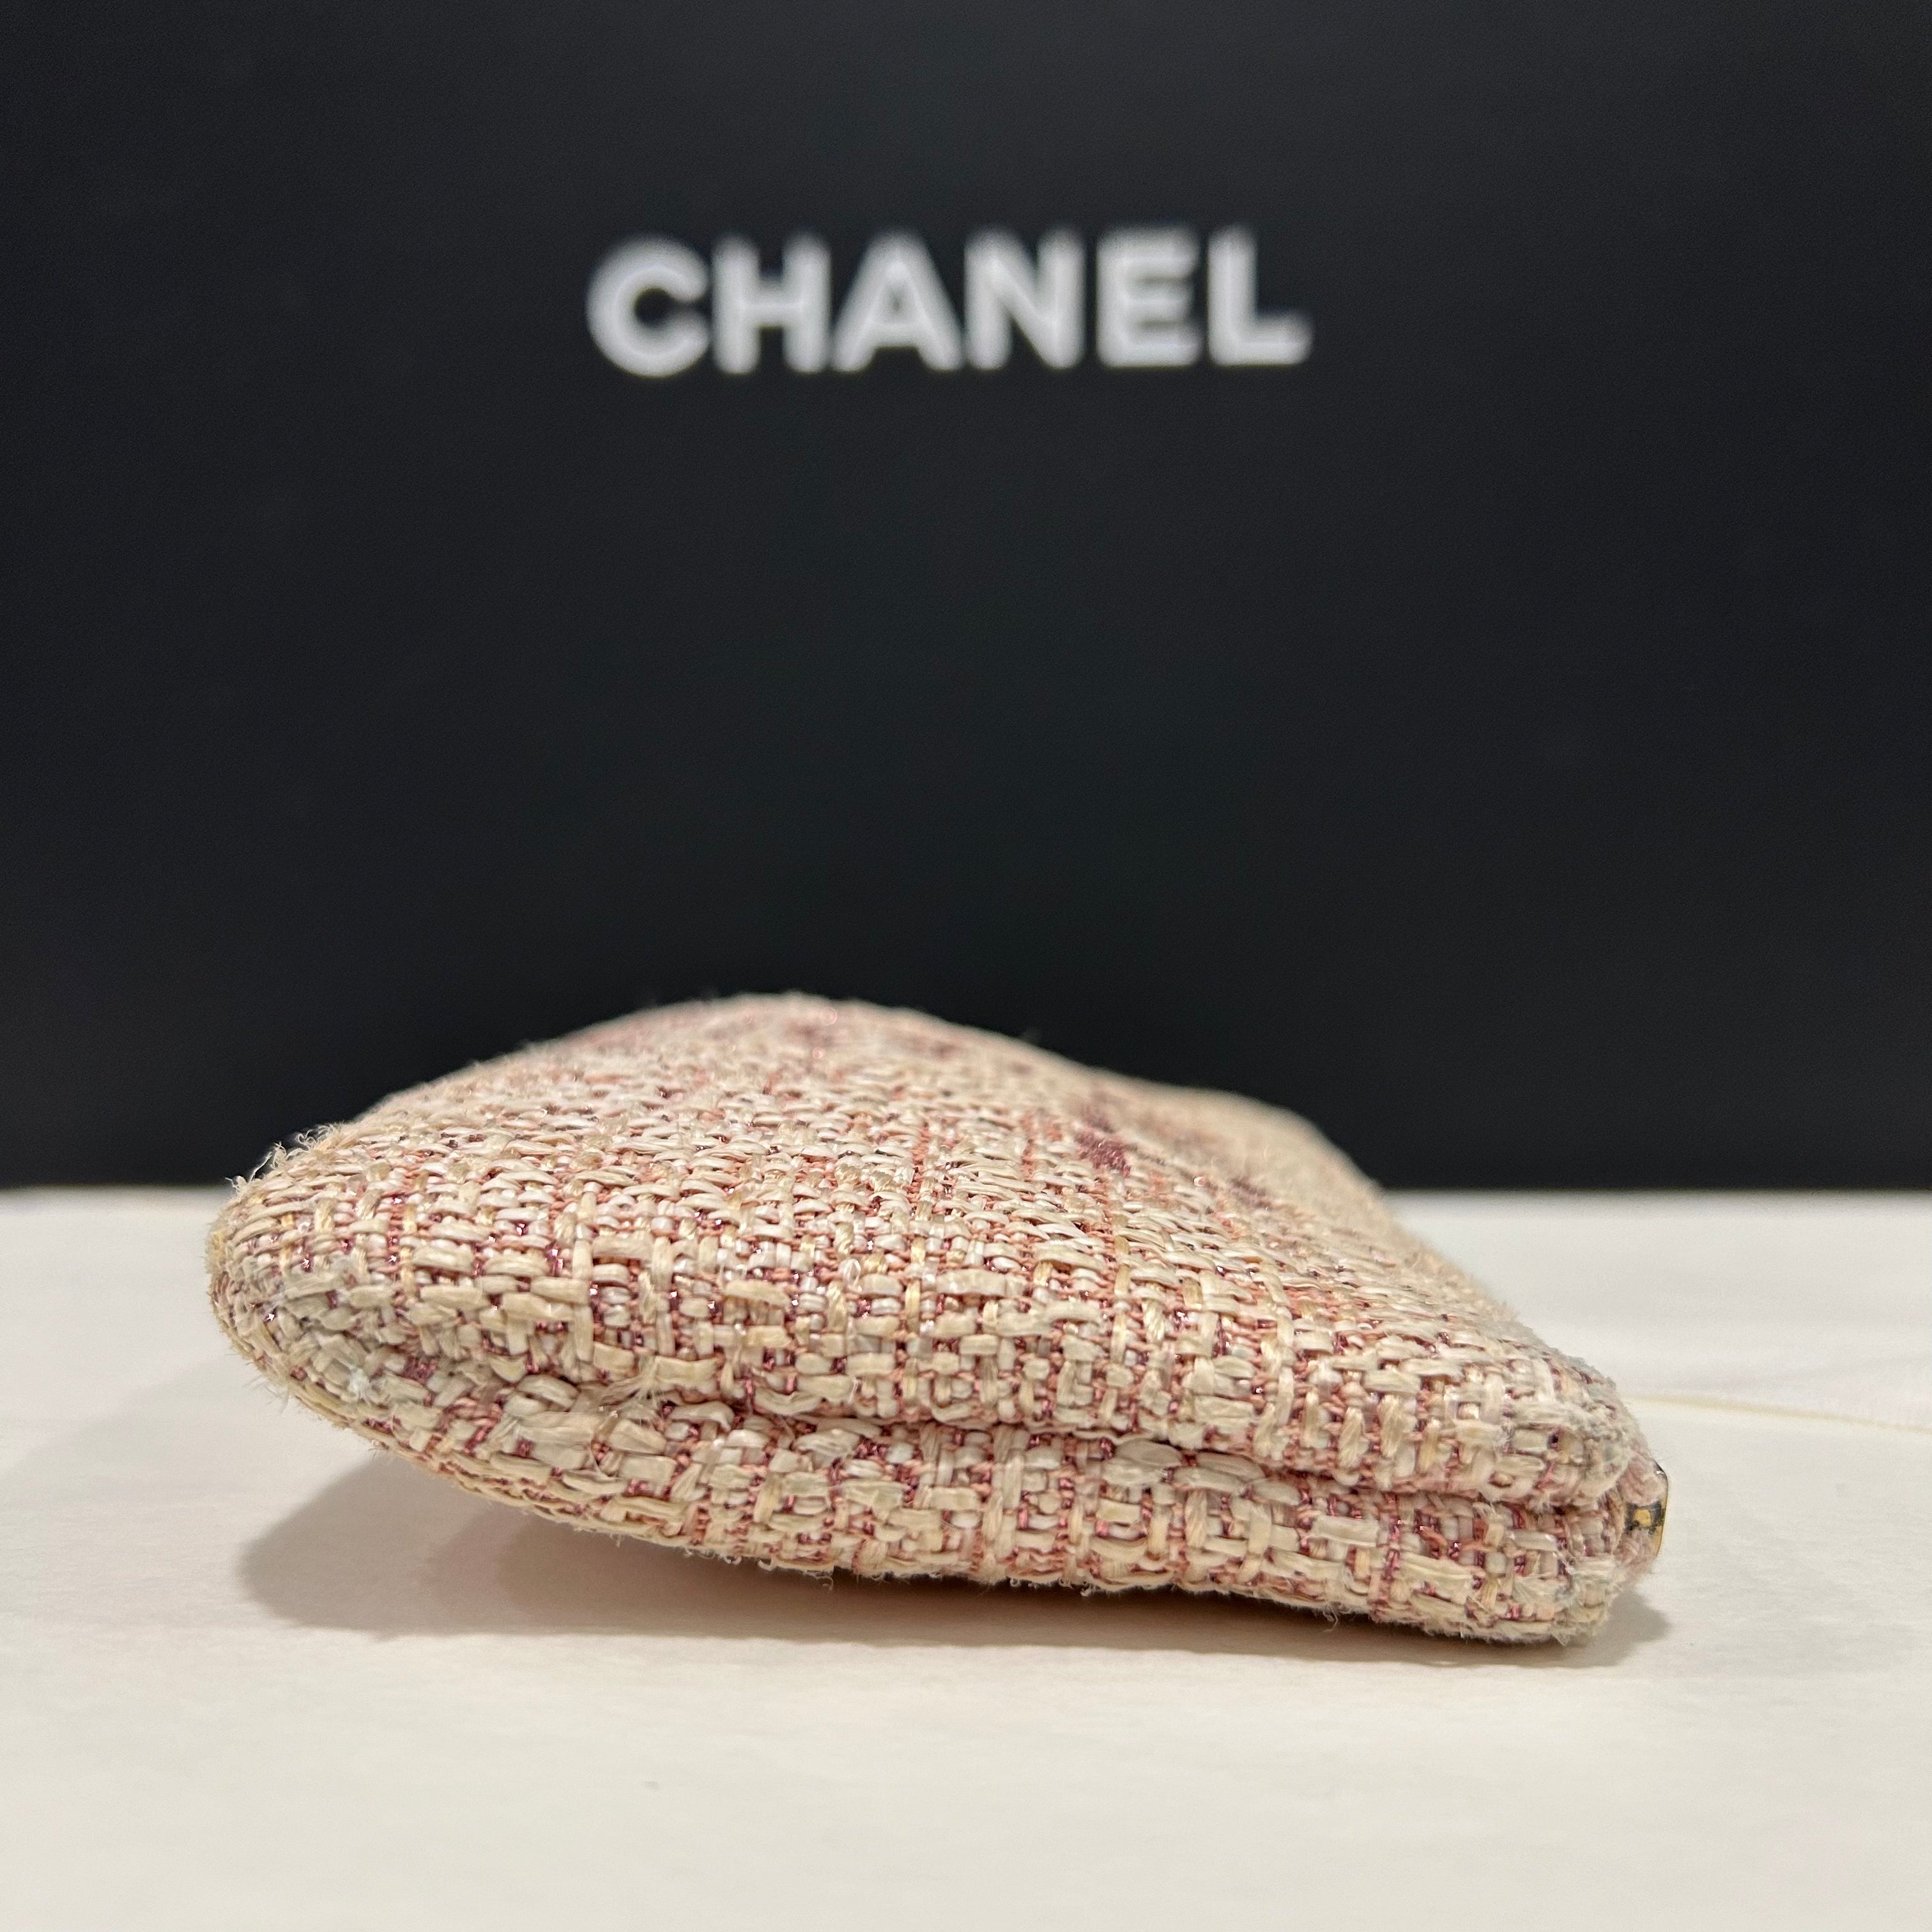 Chanel - 迷你手拿包